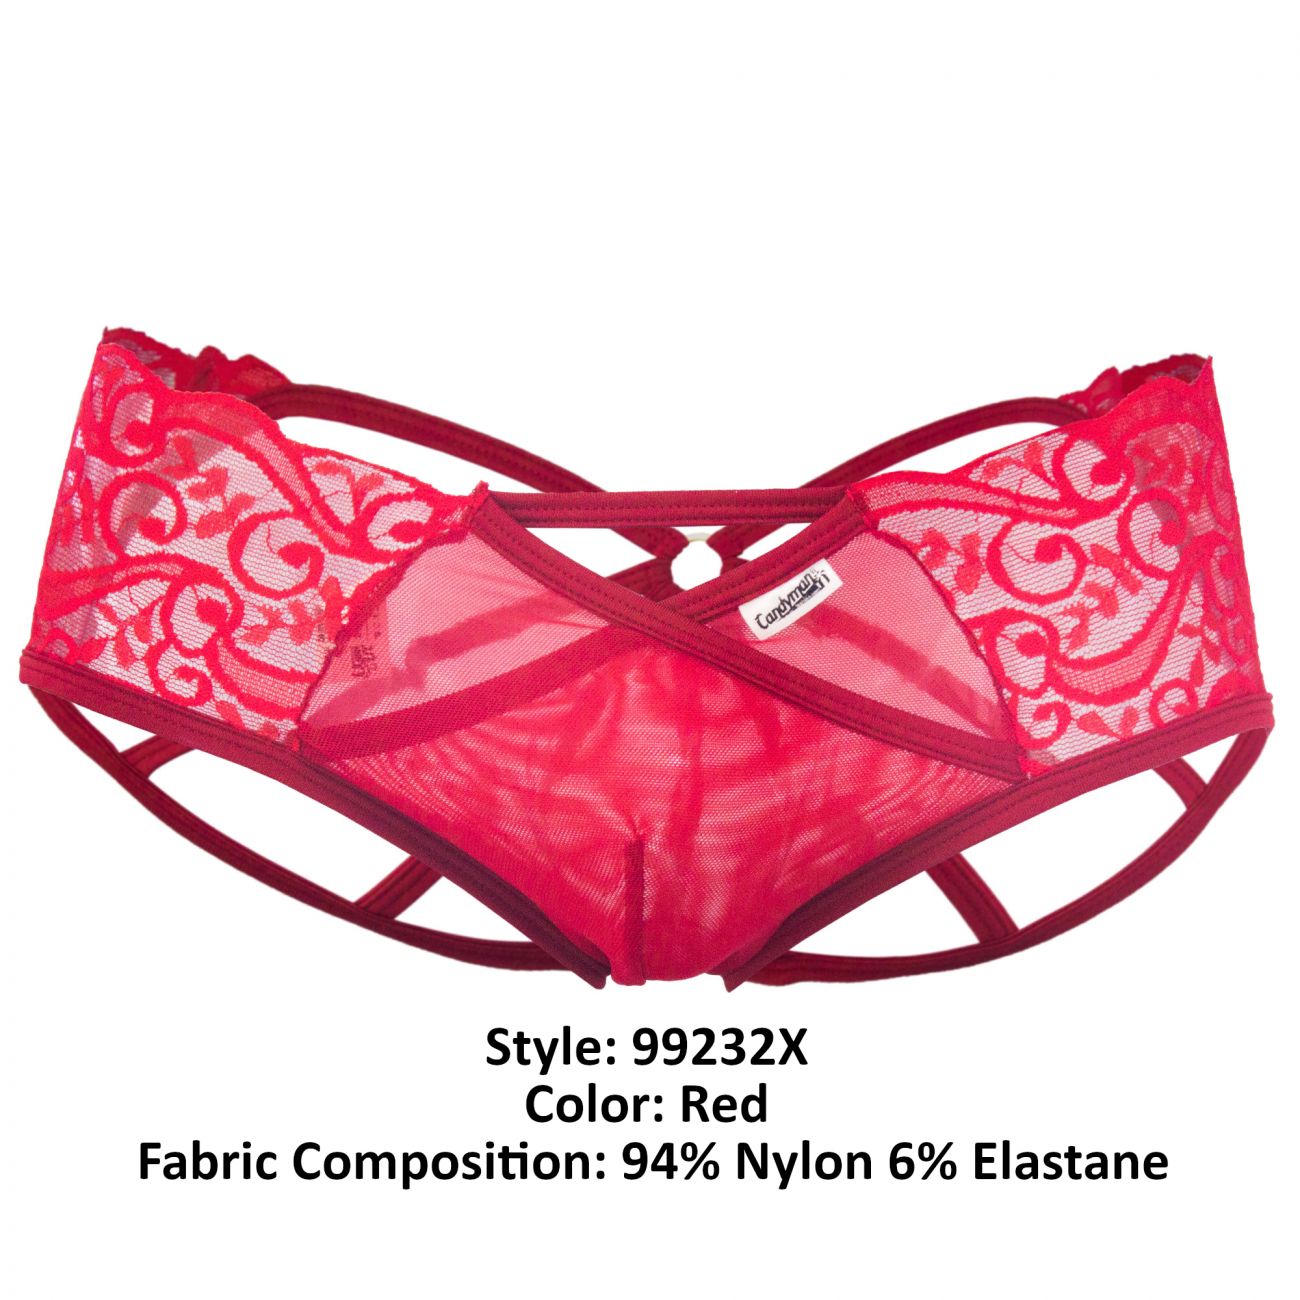 JCSTK - CandyMan 99232X Sexy Lace Jockstrap Red Plus Sizes